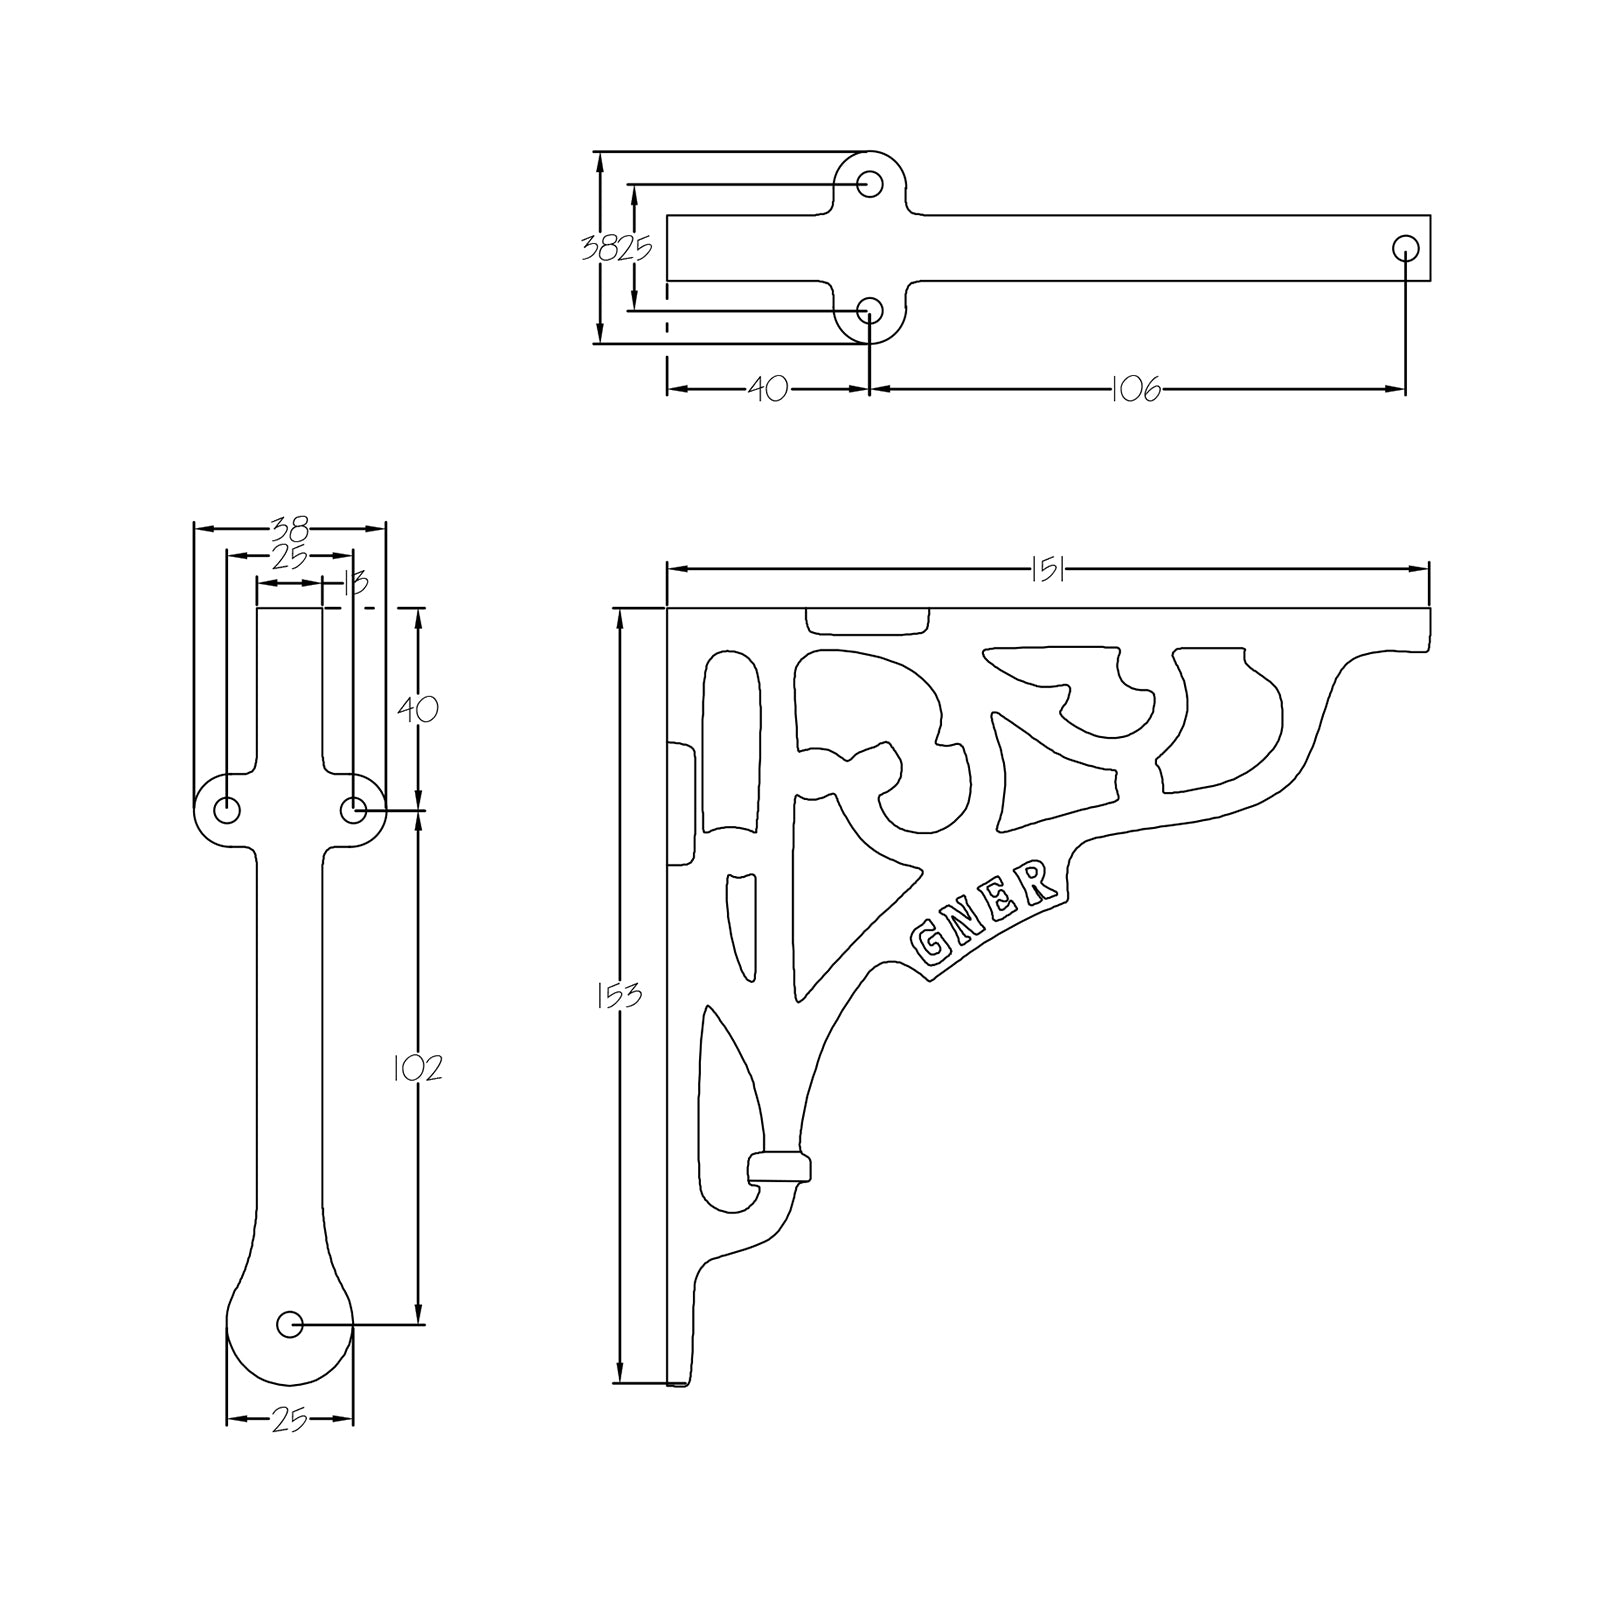 Dimension drawing for 6 inch GNER shelf bracket SHOW